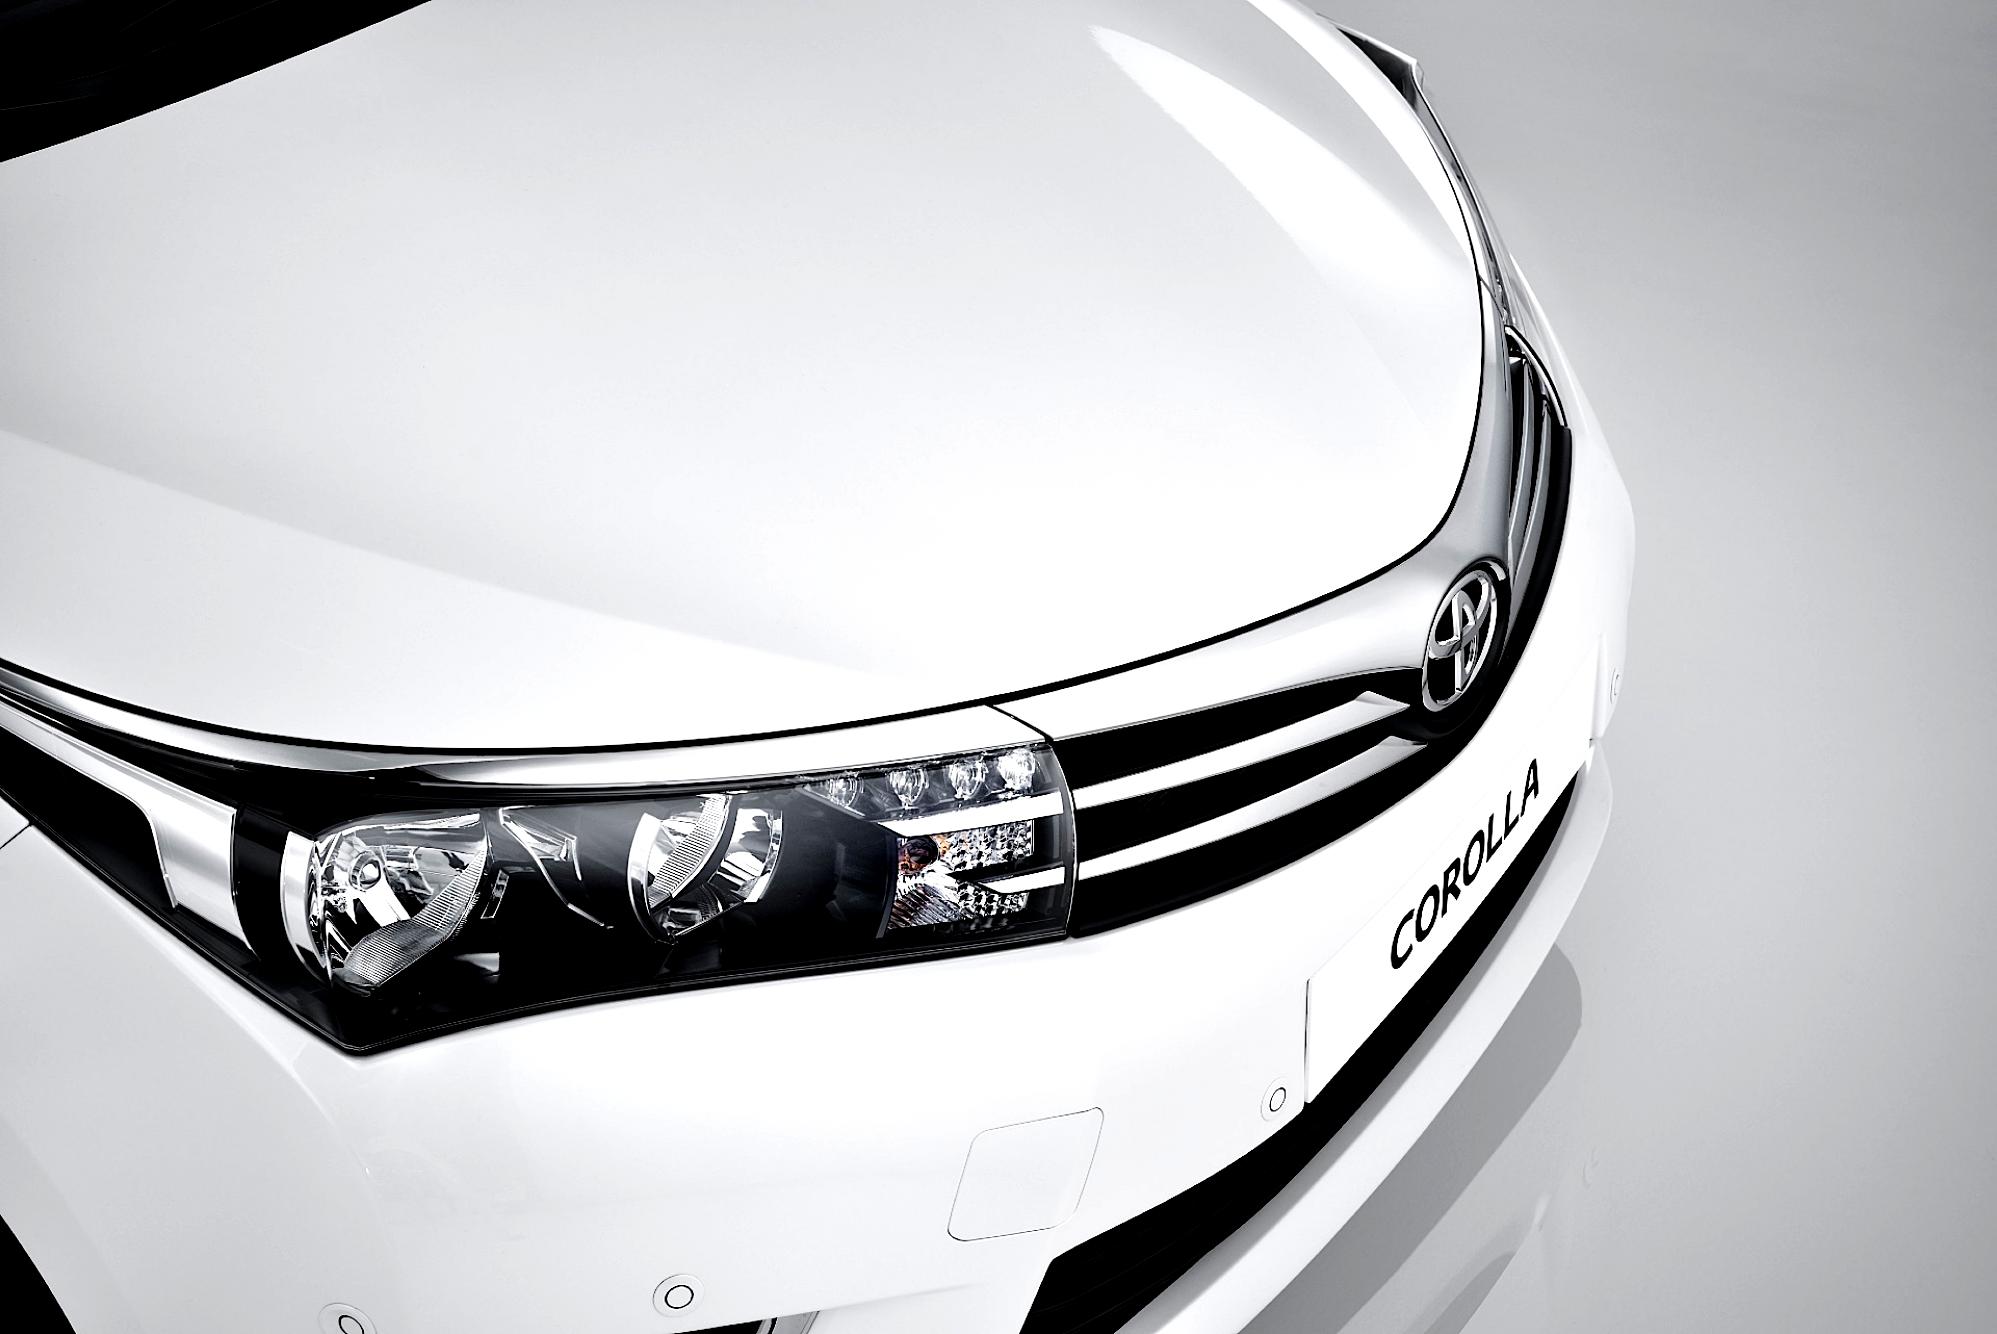 Toyota Corolla EU 2013 #80